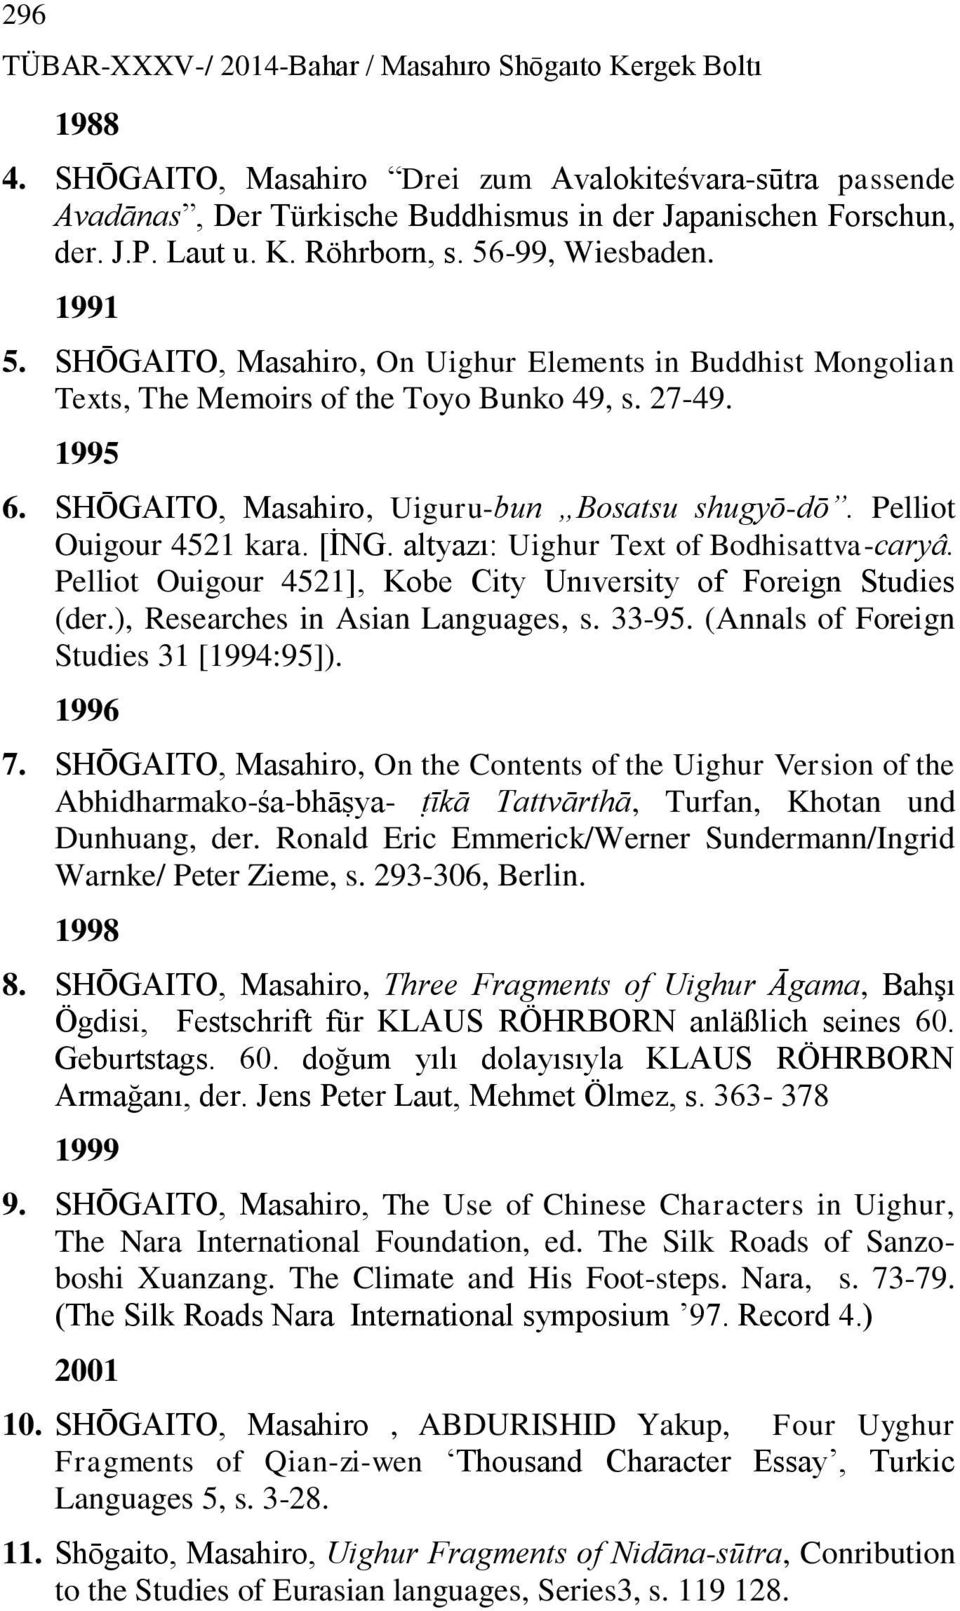 SHŌGAITO, Masahiro, Uiguru-bun Bosatsu shugyō-dō. Pelliot Ouigour 4521 kara. [İNG. altyazı: Uighur Text of Bodhisattva-caryâ. Pelliot Ouigour 4521], Kobe City Unıversity of Foreign Studies (der.